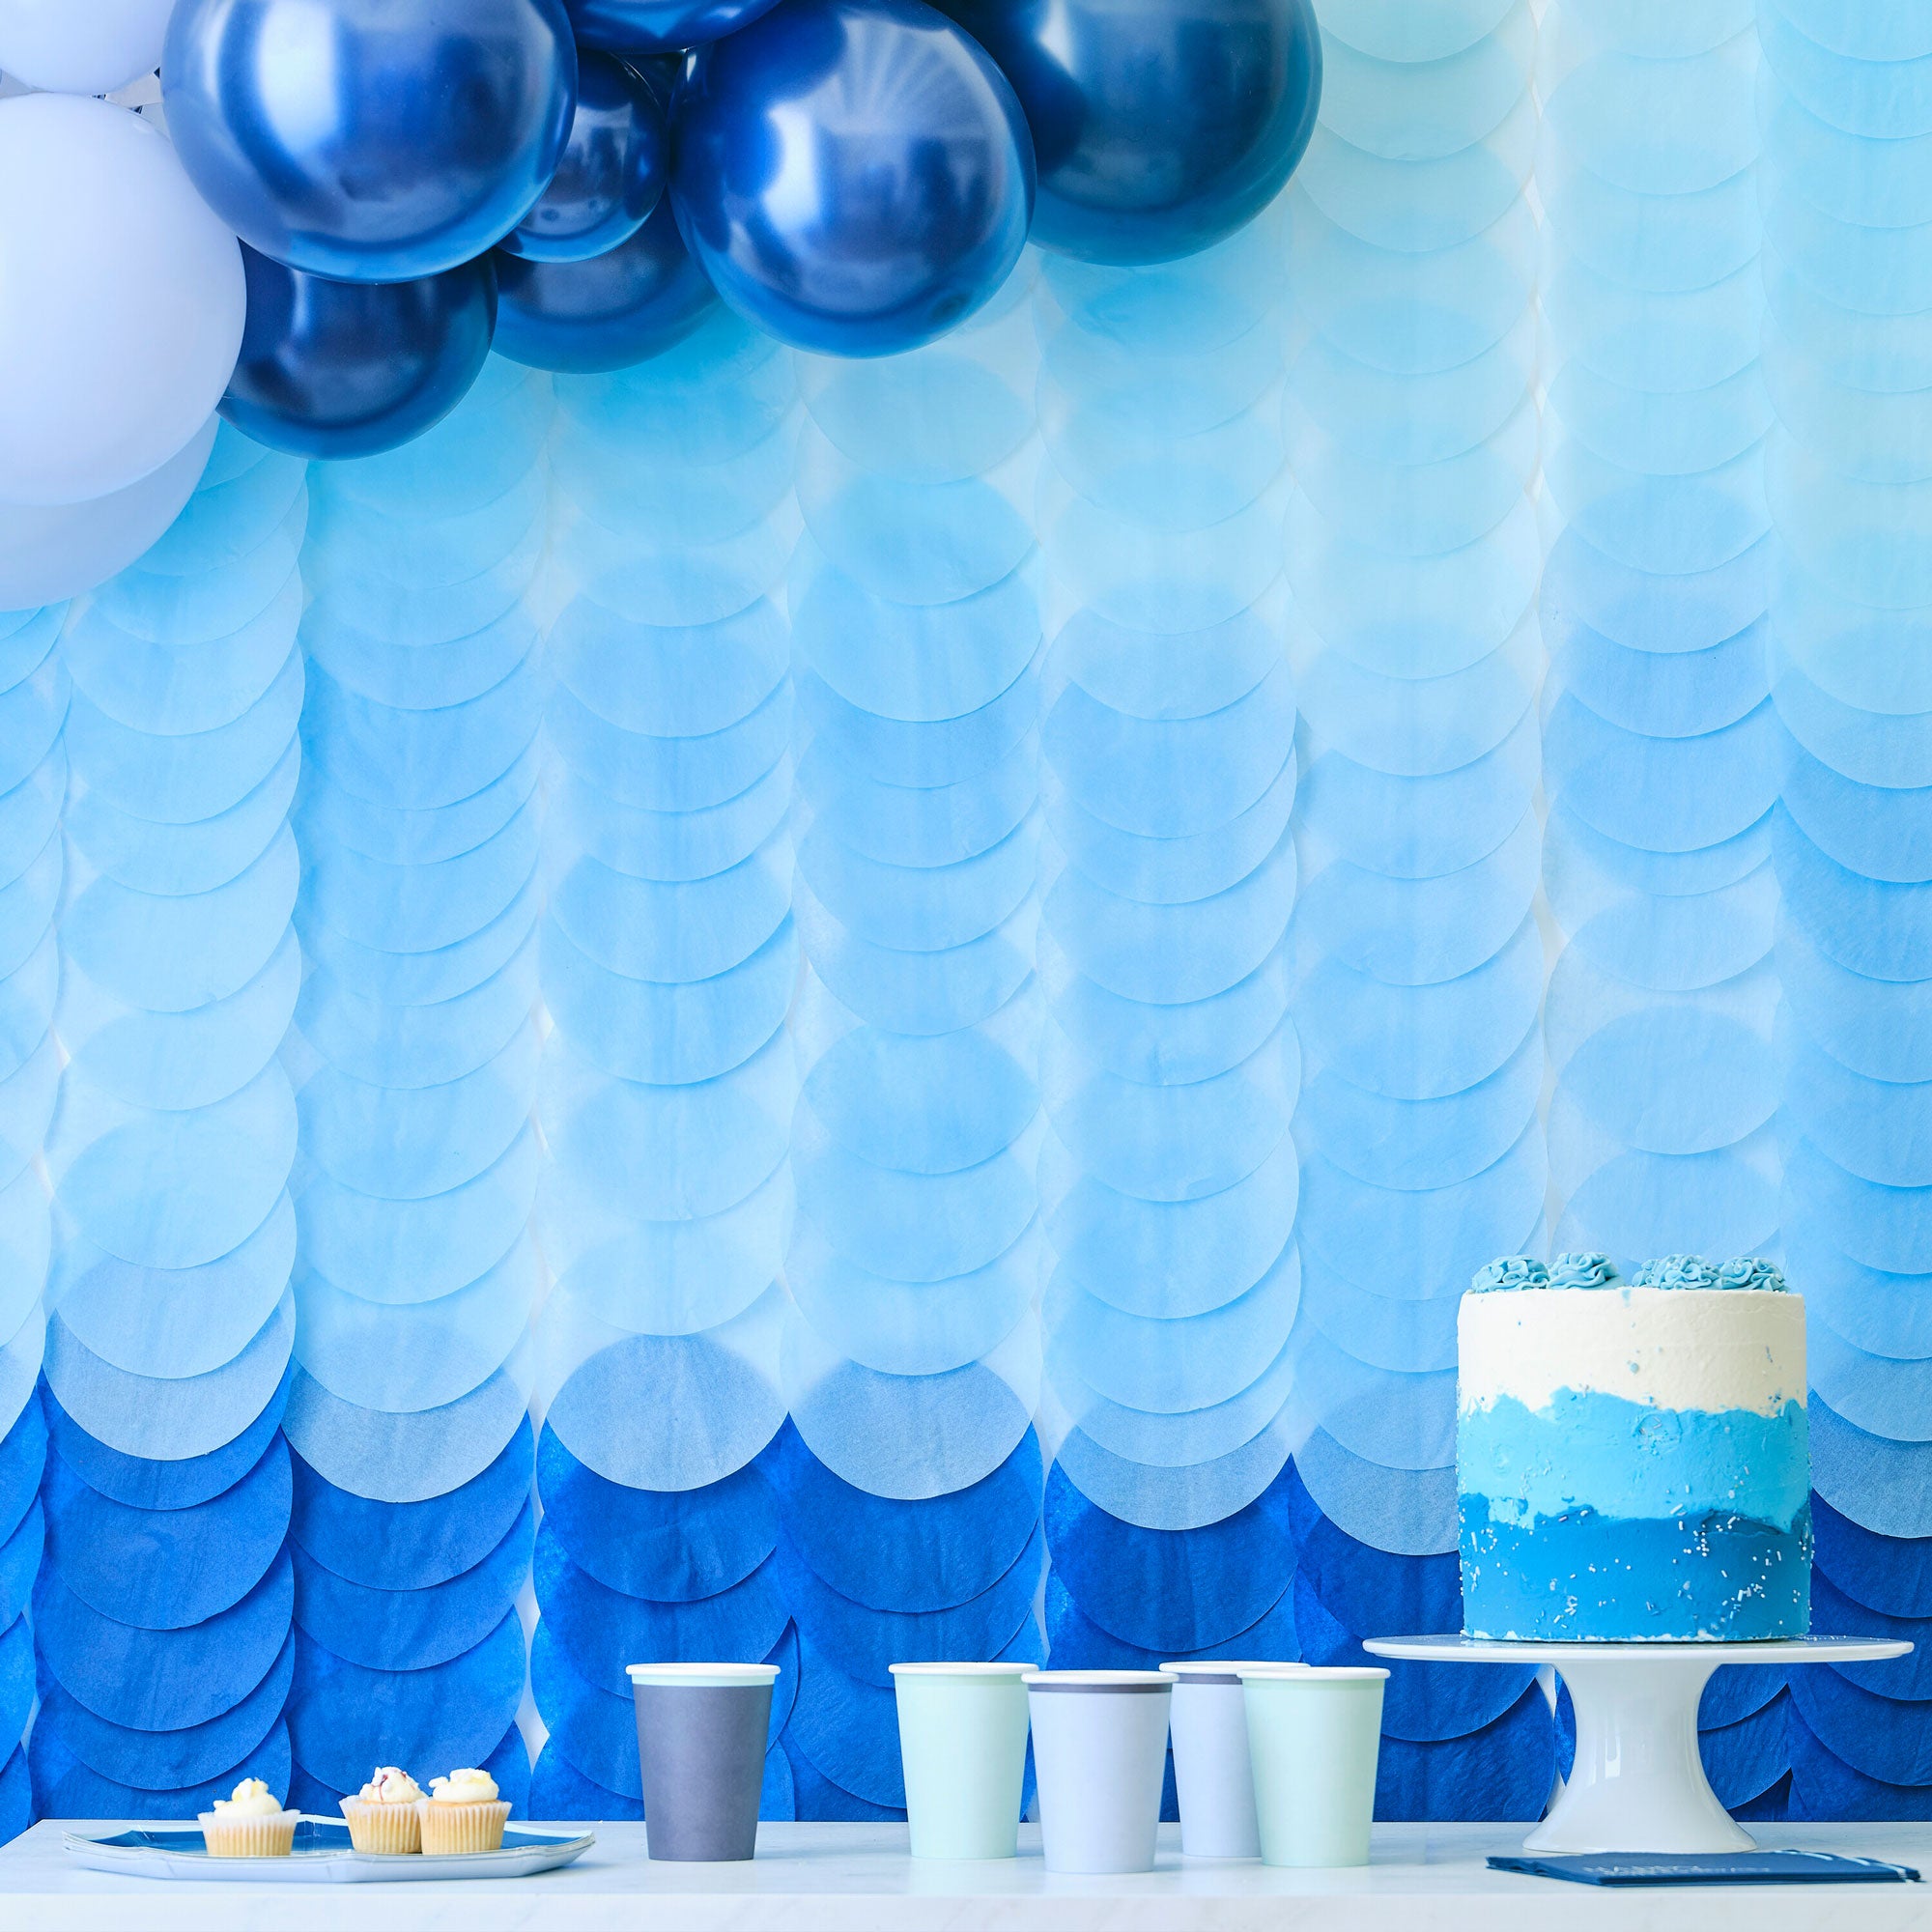 Mix It Up Blue Ombre Tissue Paper Disc Party Backdrop Decoration